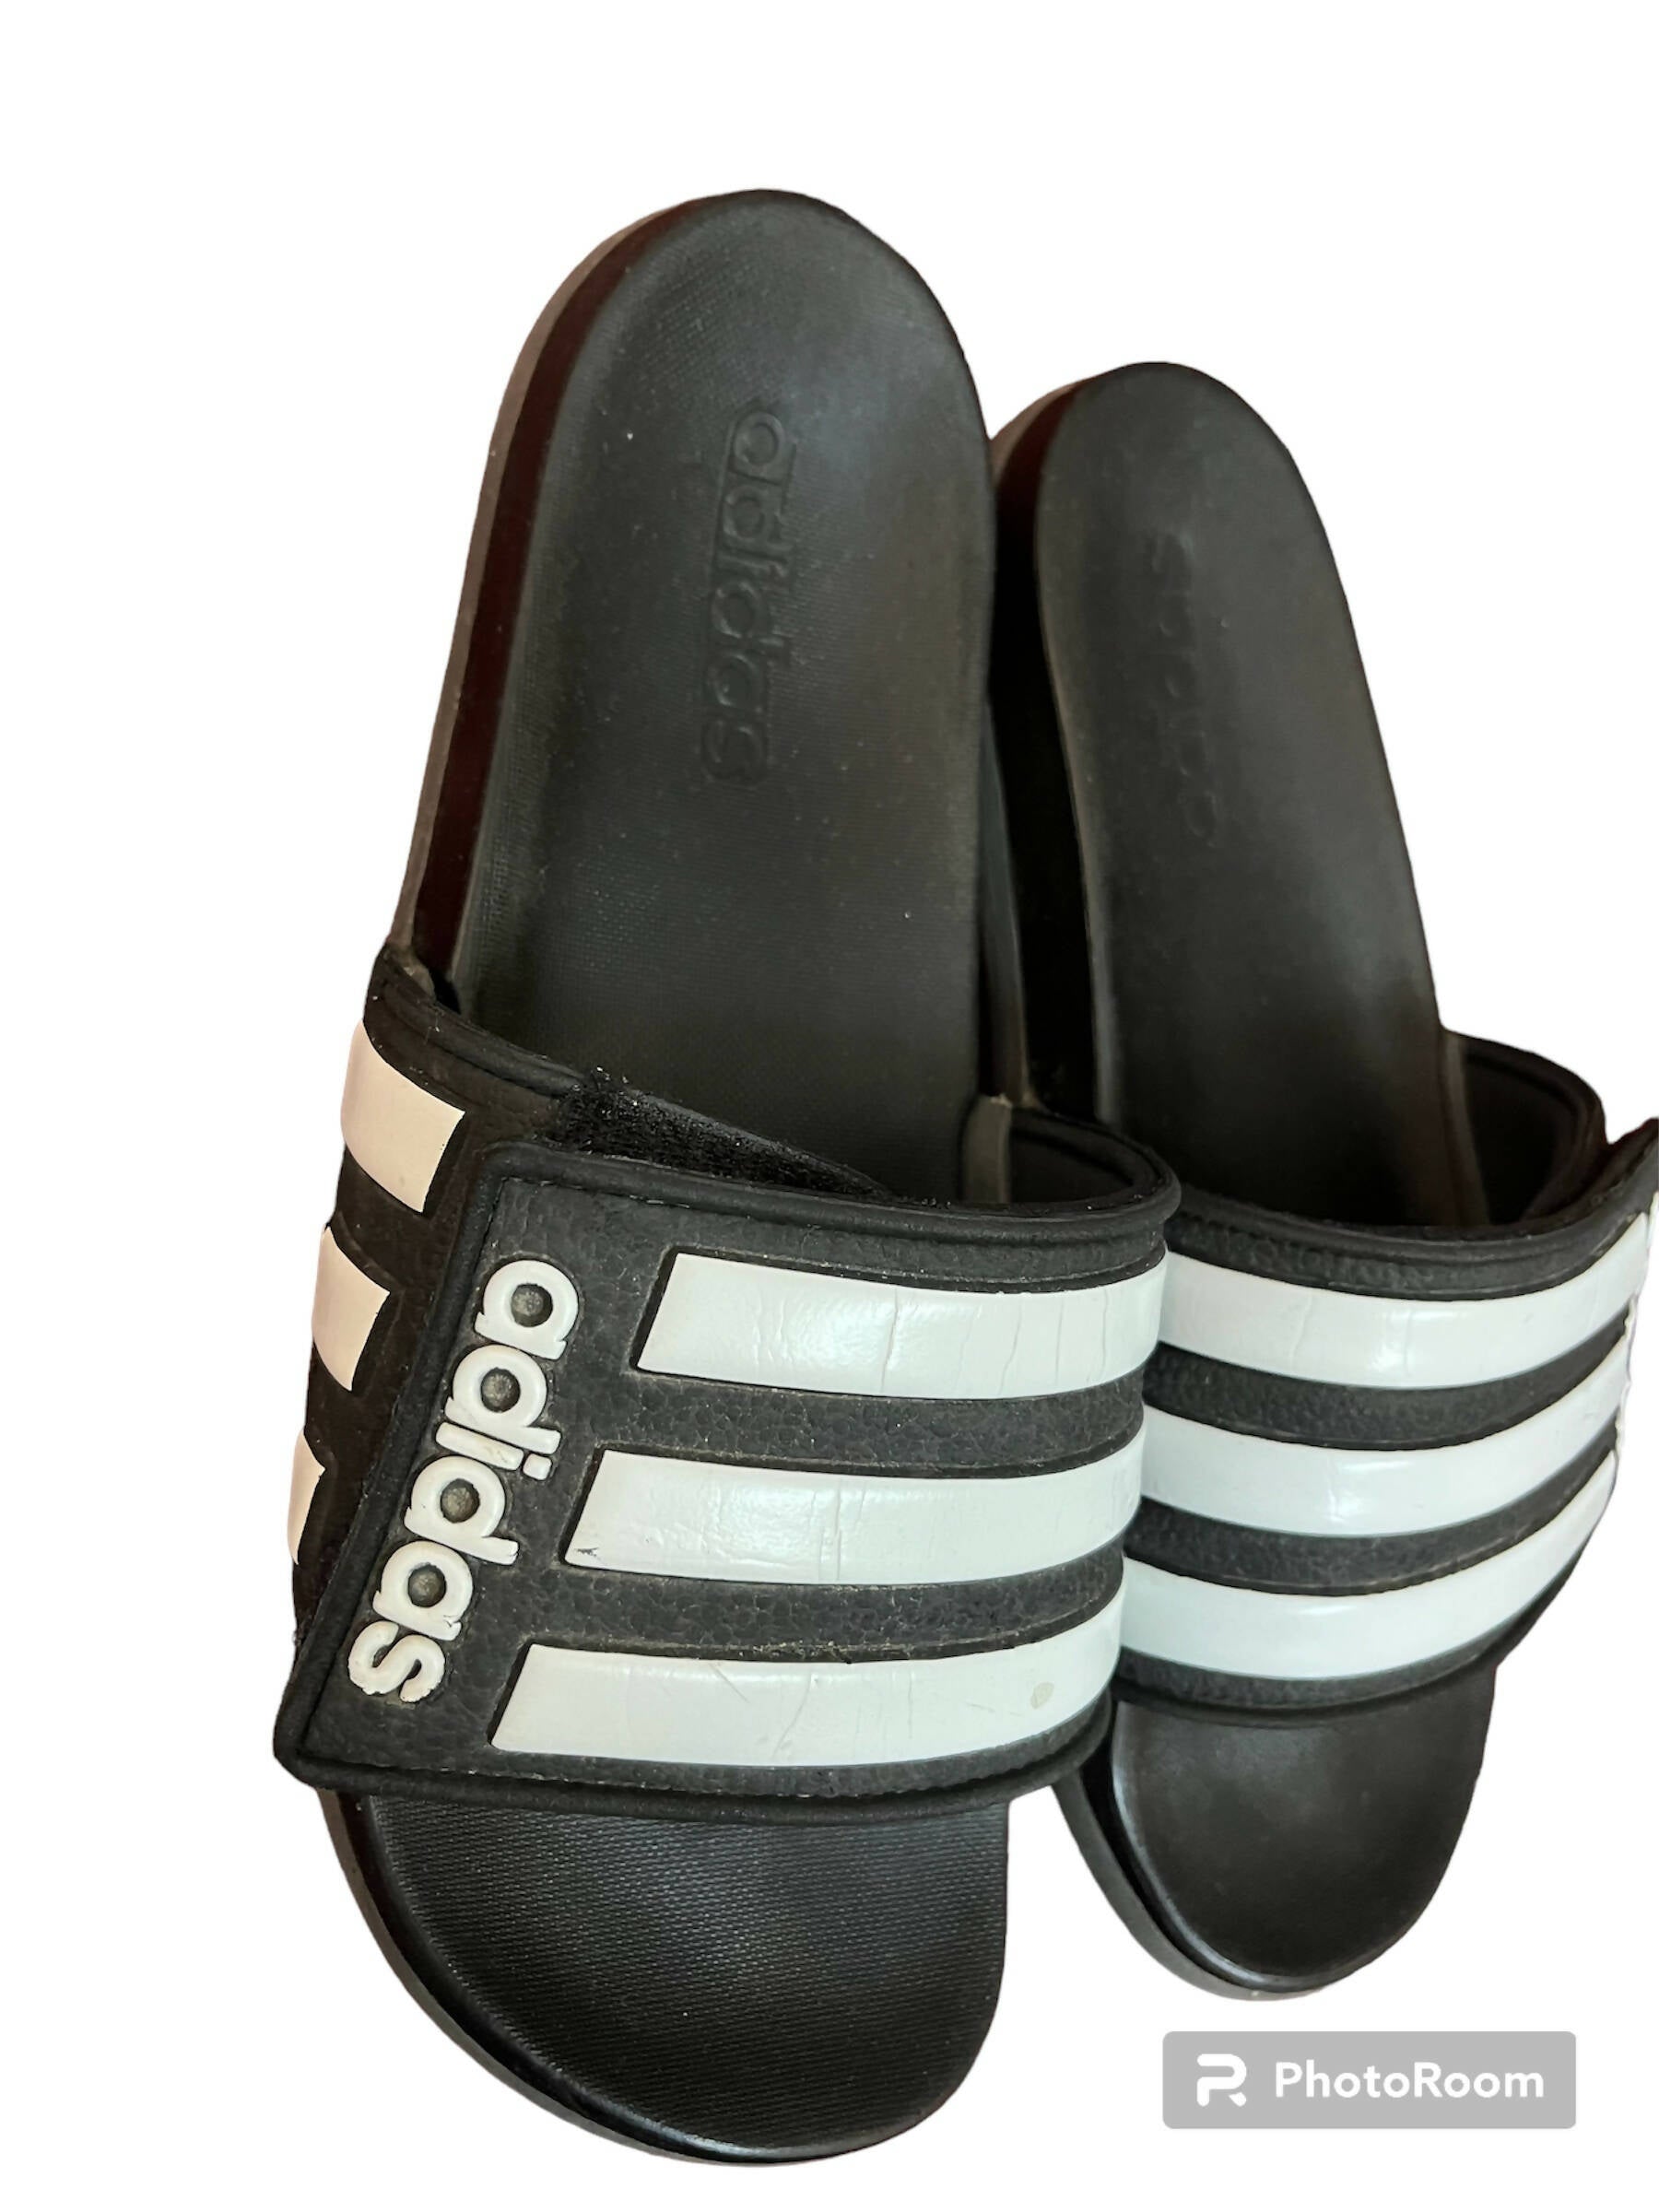 Adidas | Black White Adilette Comfort Adjustable Slides | Men Accessories & Footwear | Worn Once